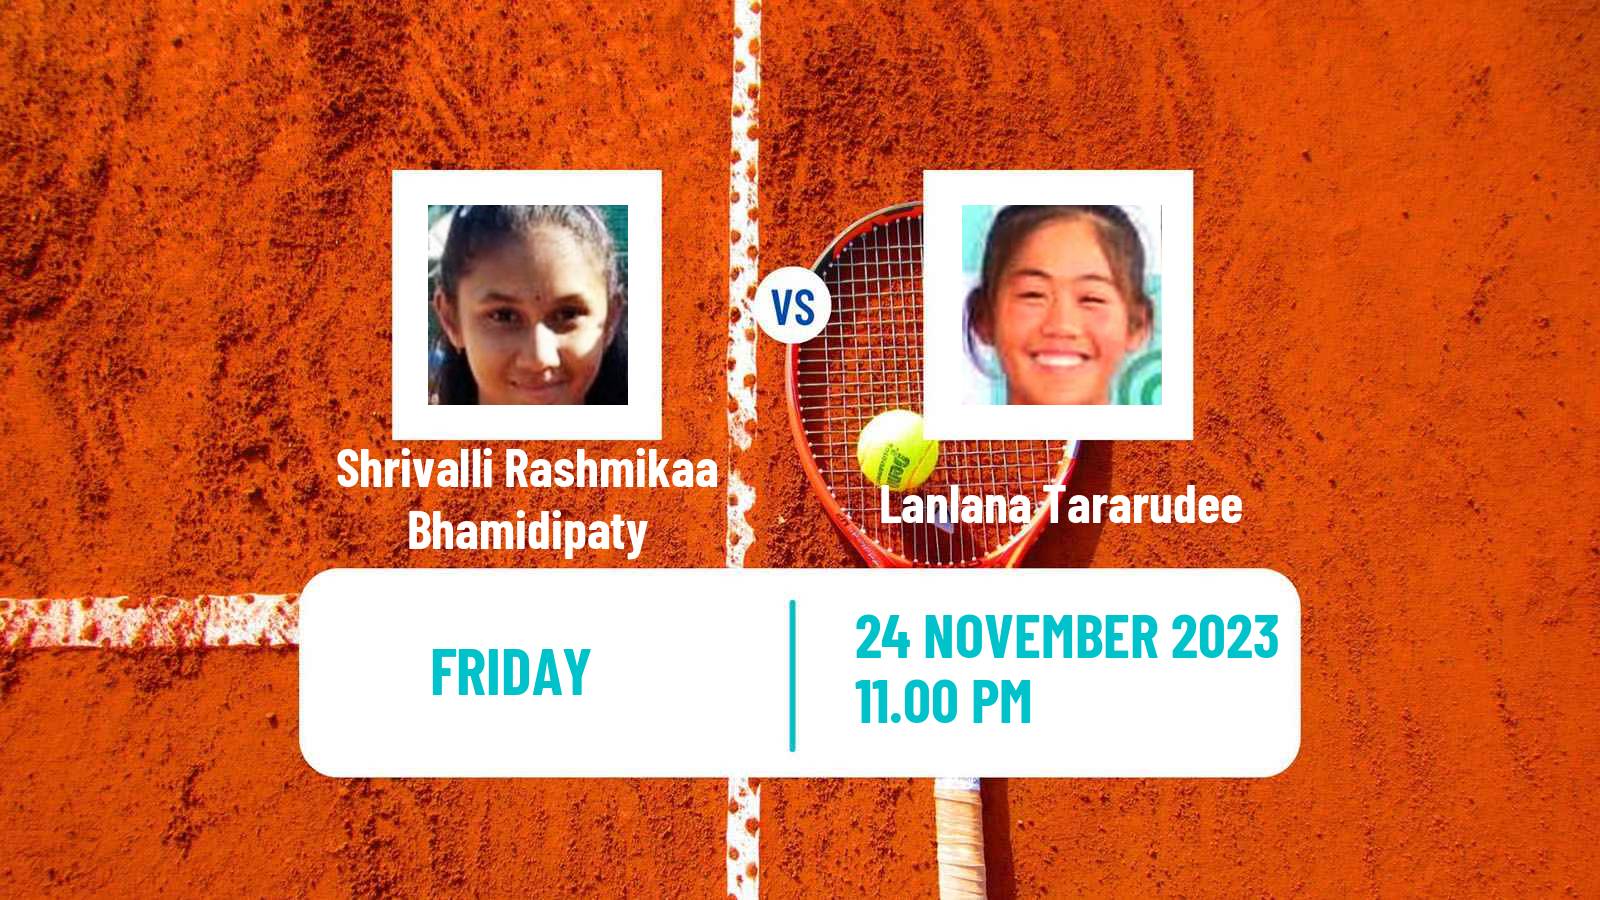 Tennis ITF W25 Bengaluru 2 Women Shrivalli Rashmikaa Bhamidipaty - Lanlana Tararudee